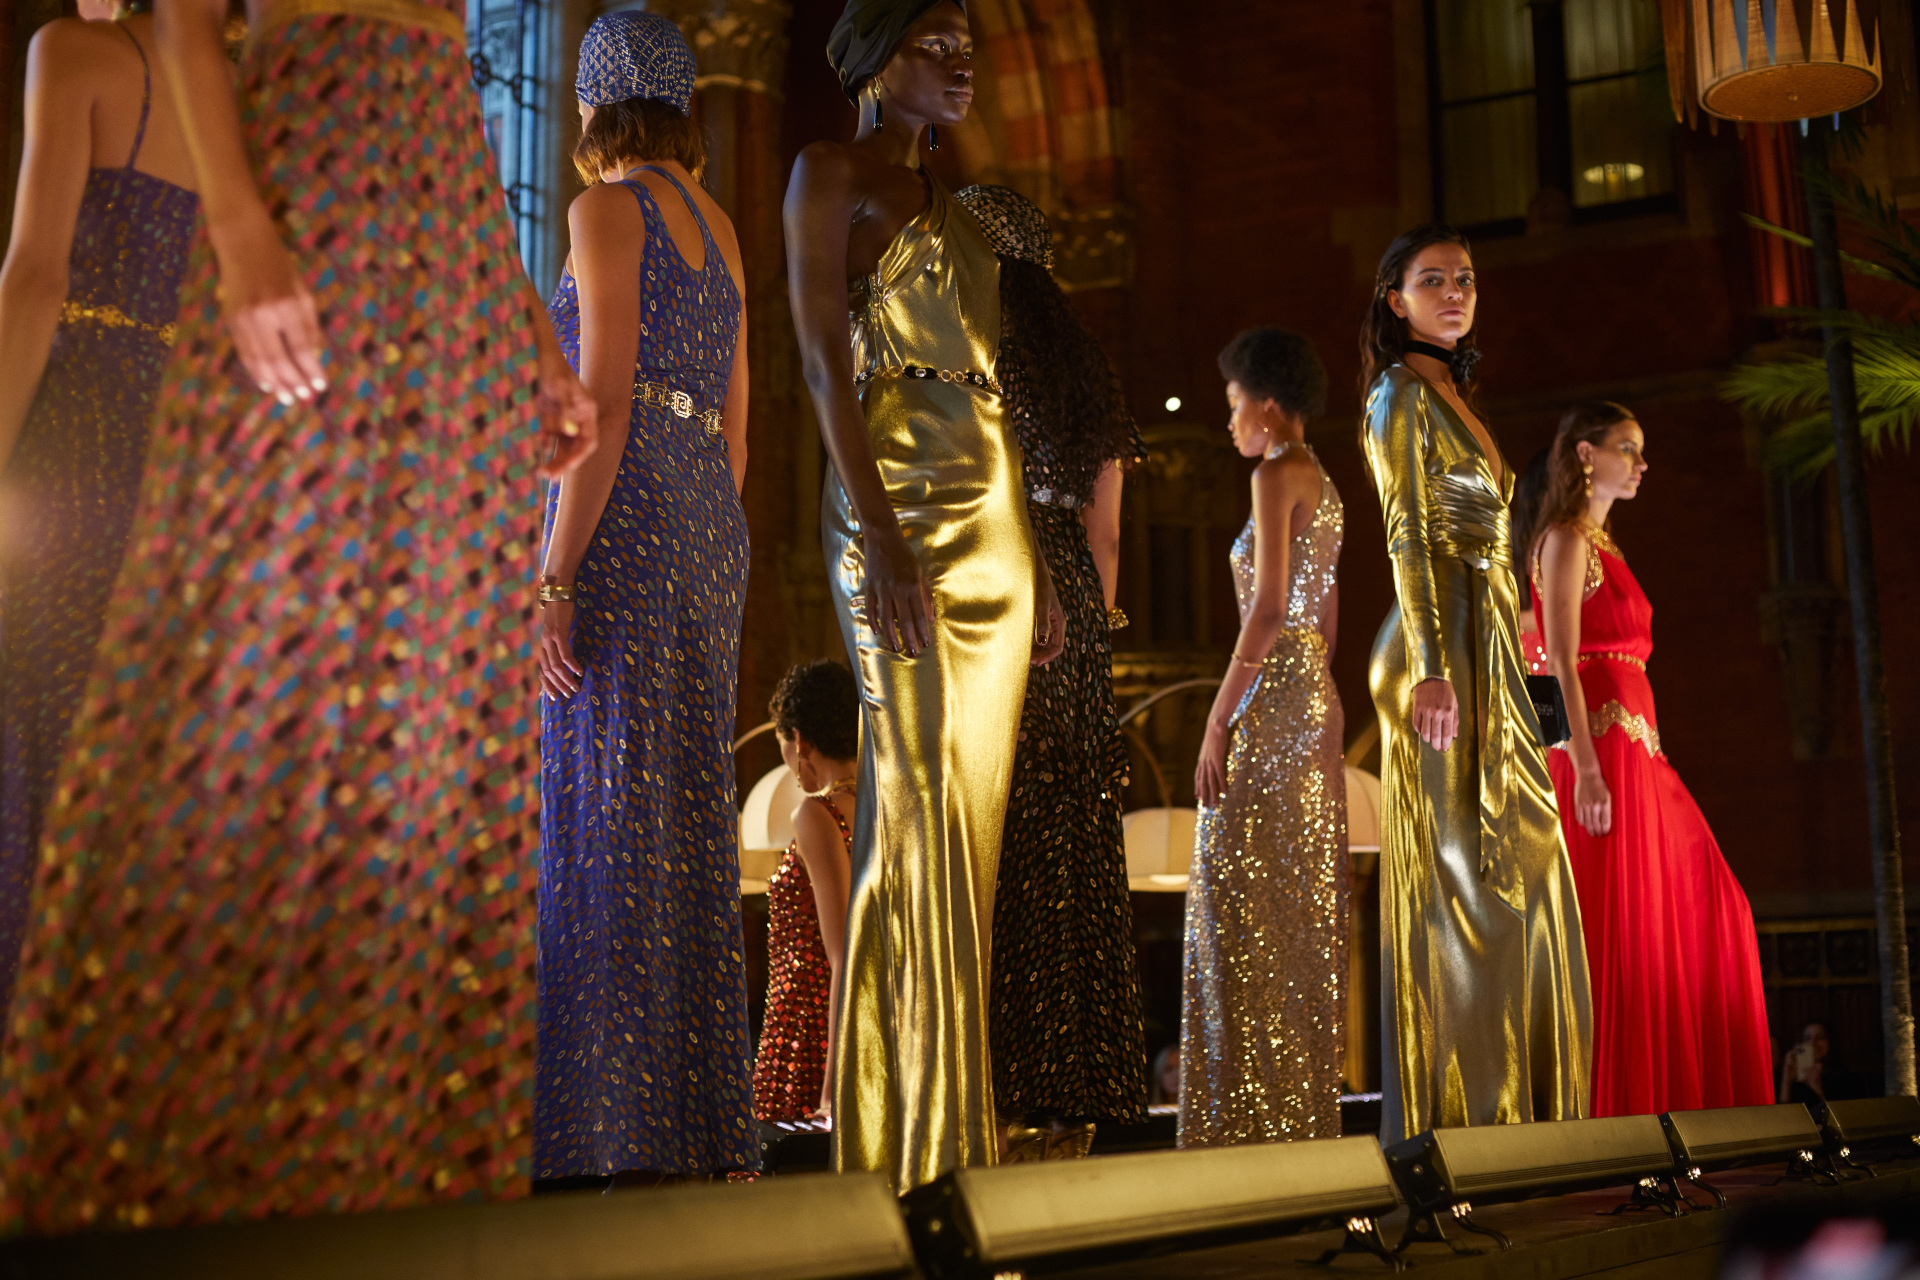 Models stood on platform in eveningwear